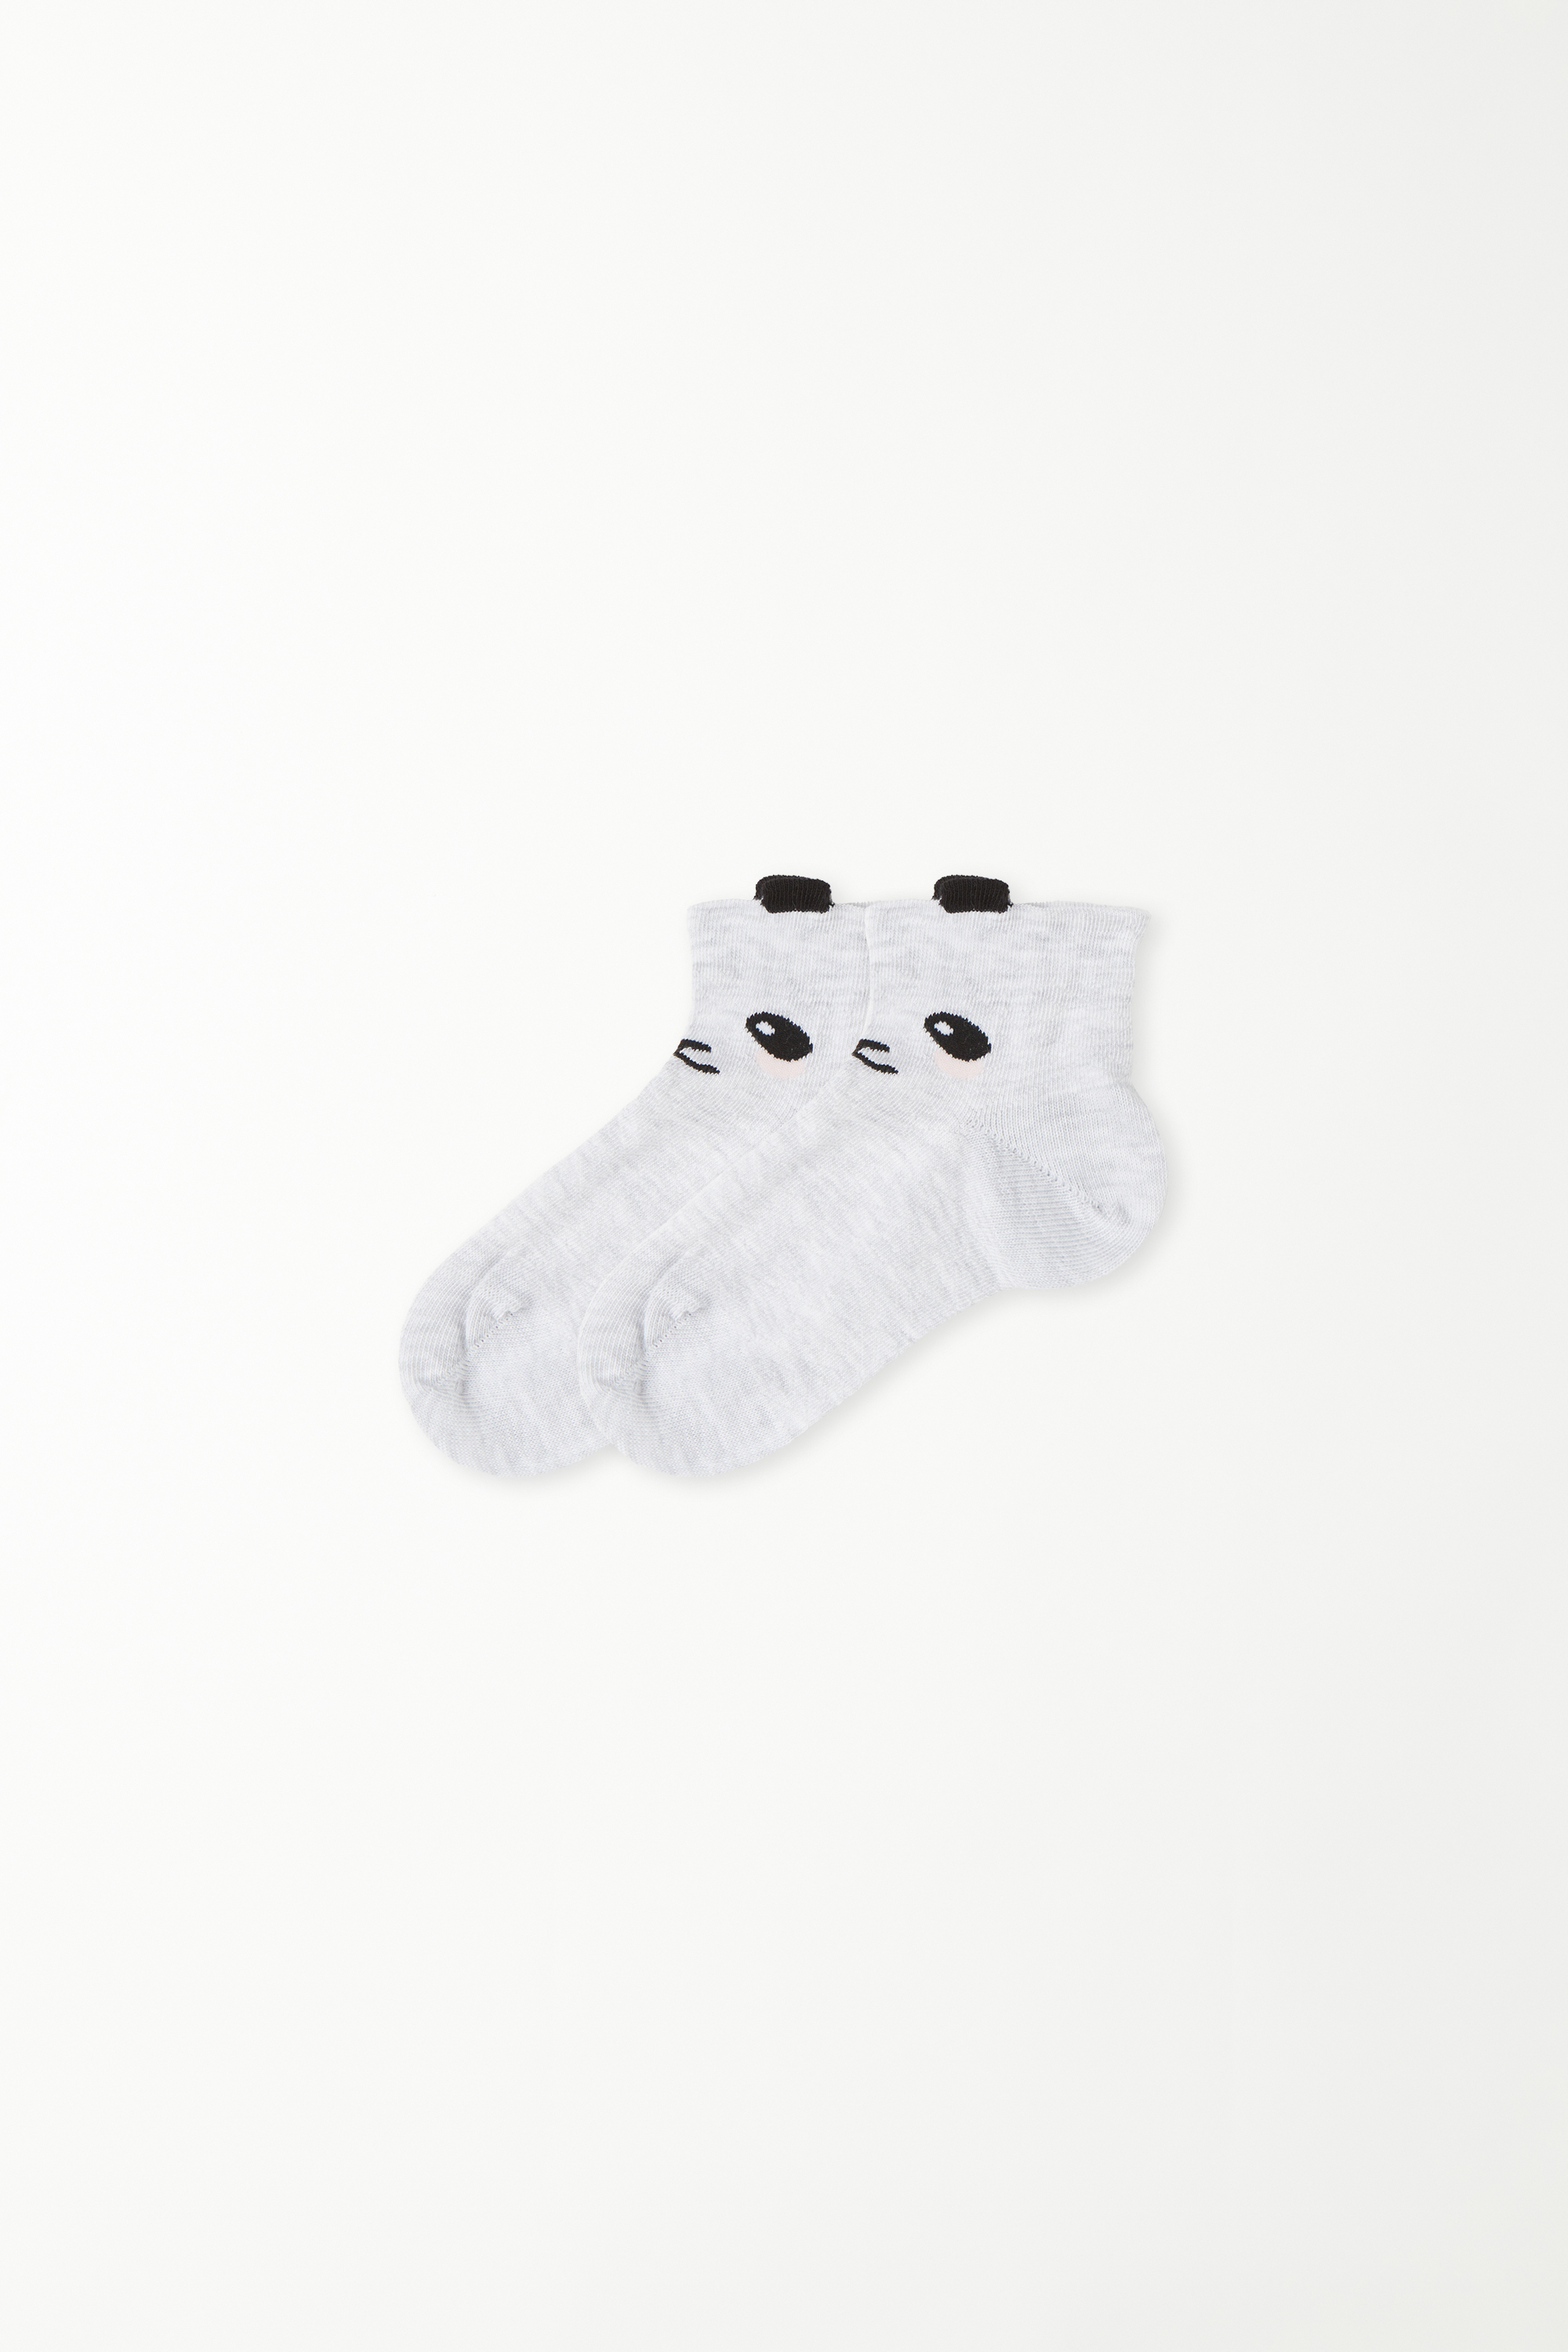 Girls’ Short Patterned Cotton Socks